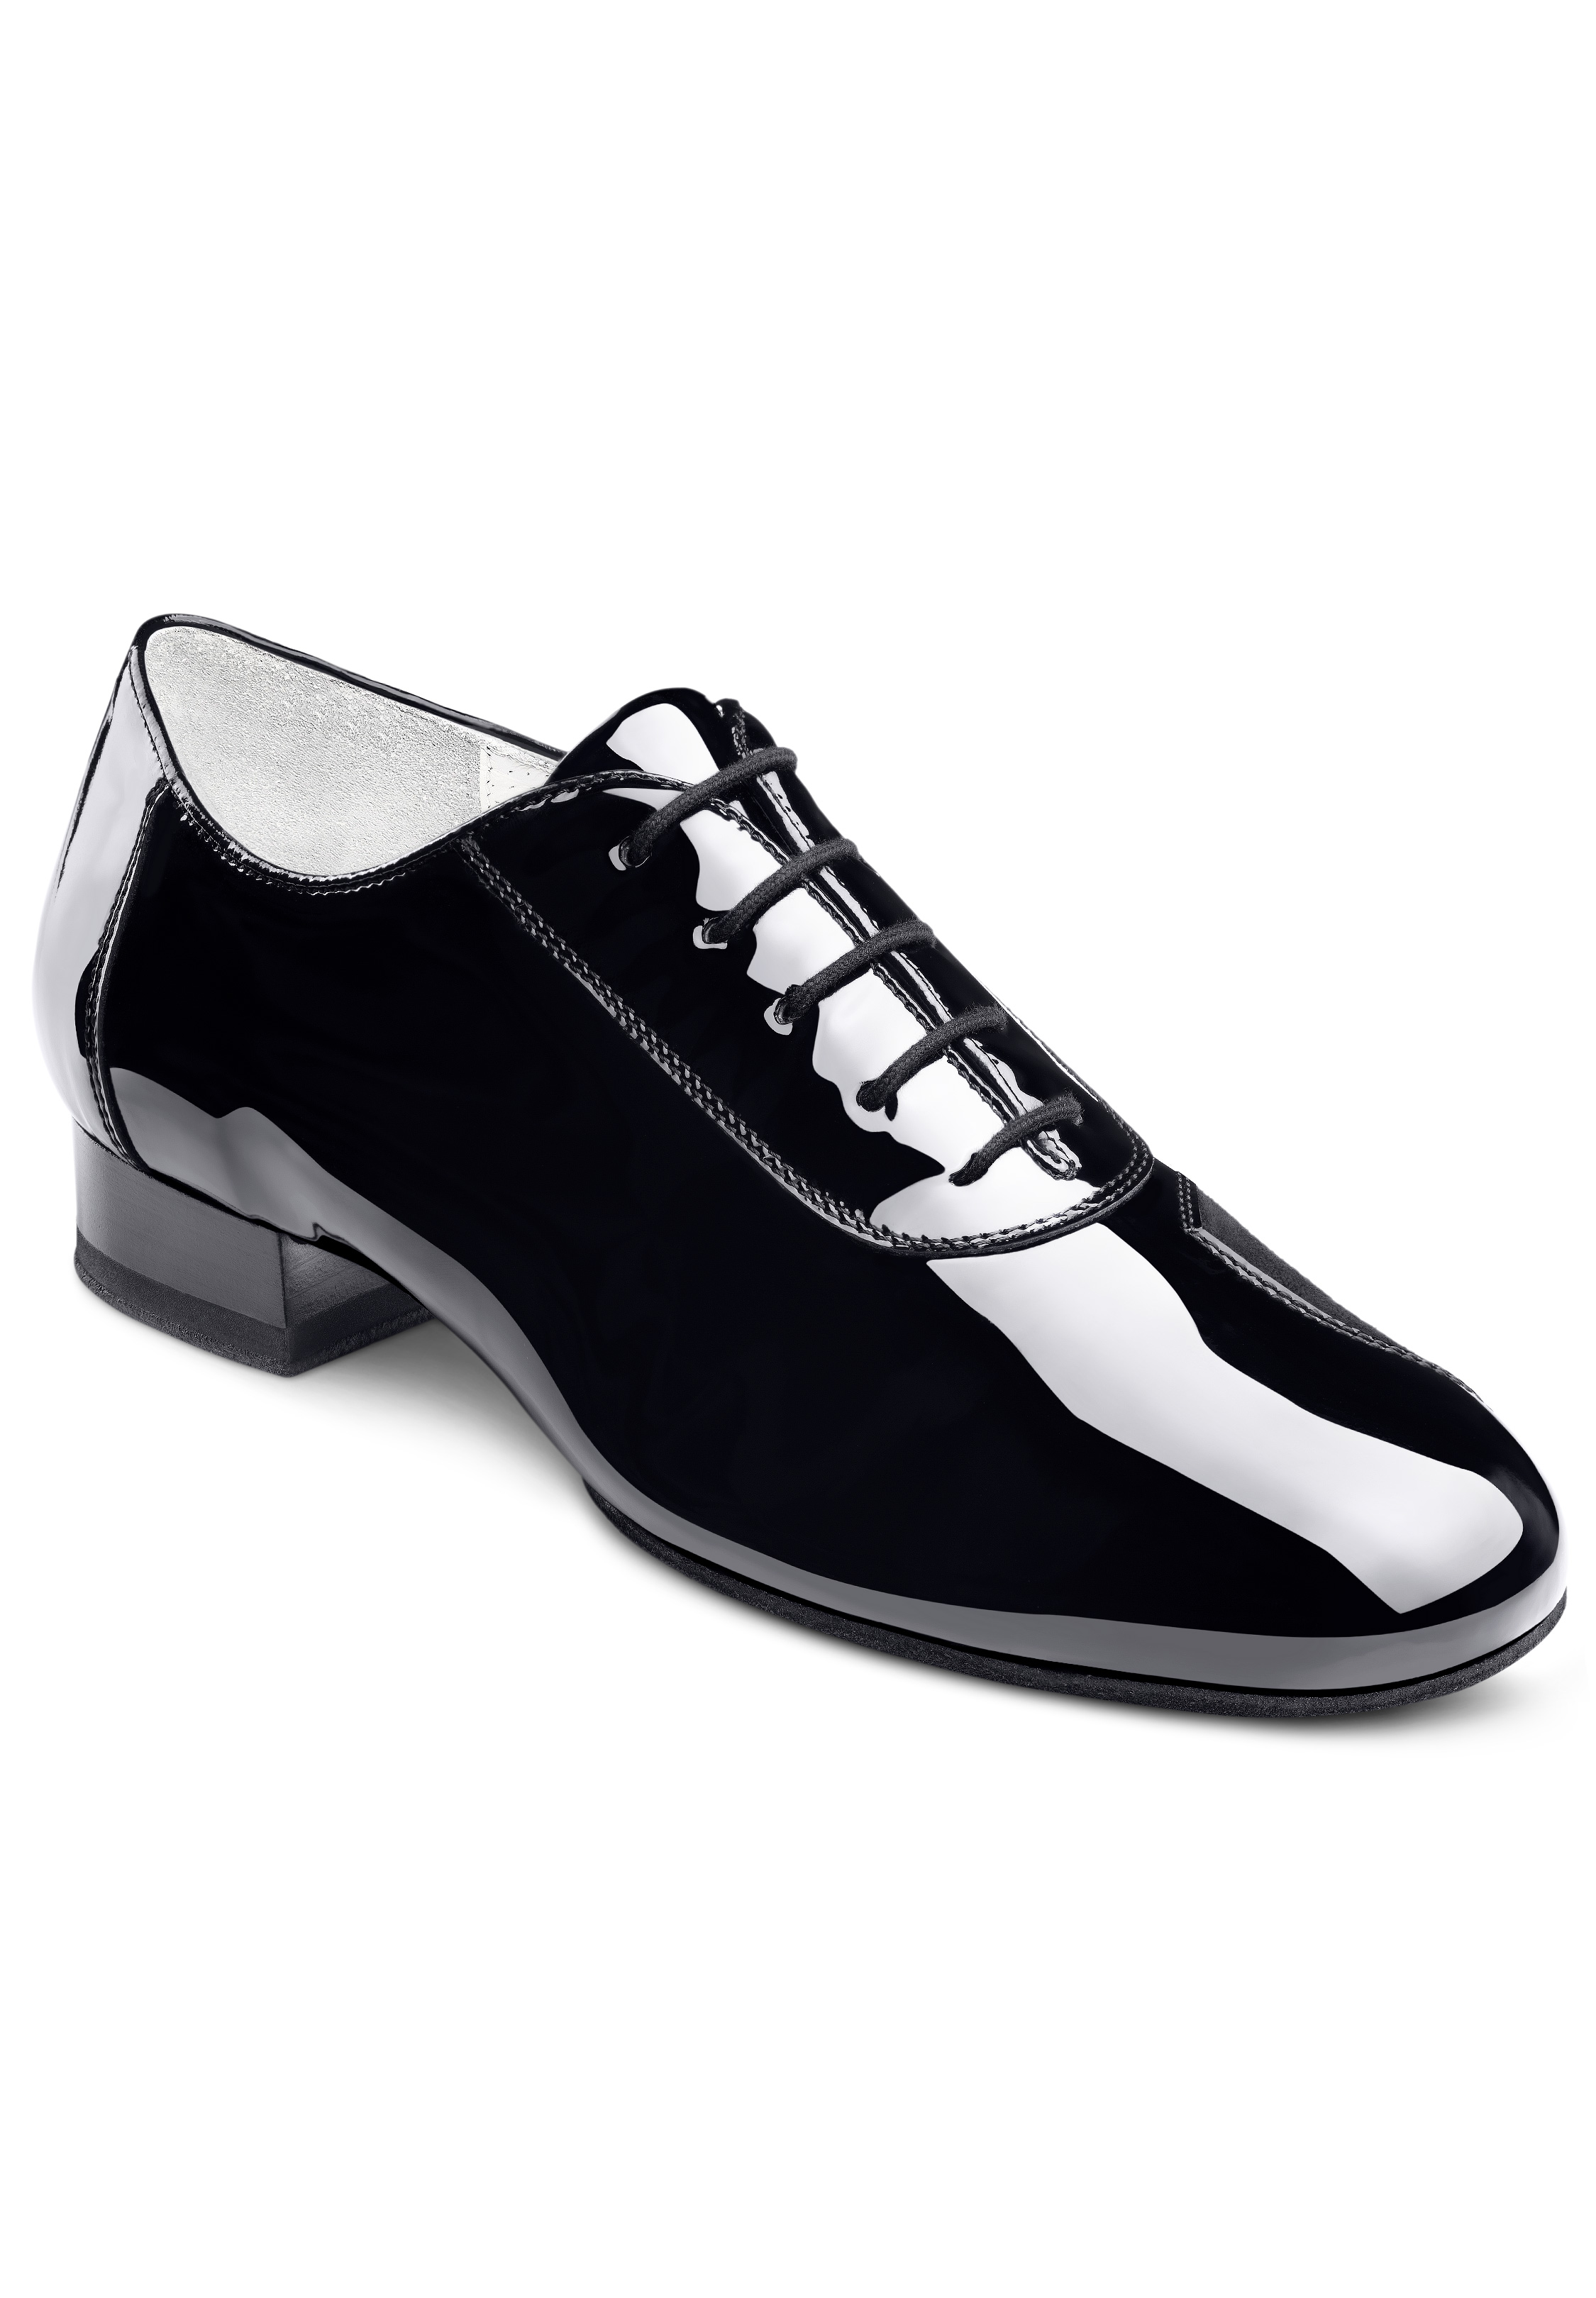 2HB Mens Ballroom Shoes Bickers | Ballroom Dance Shoes